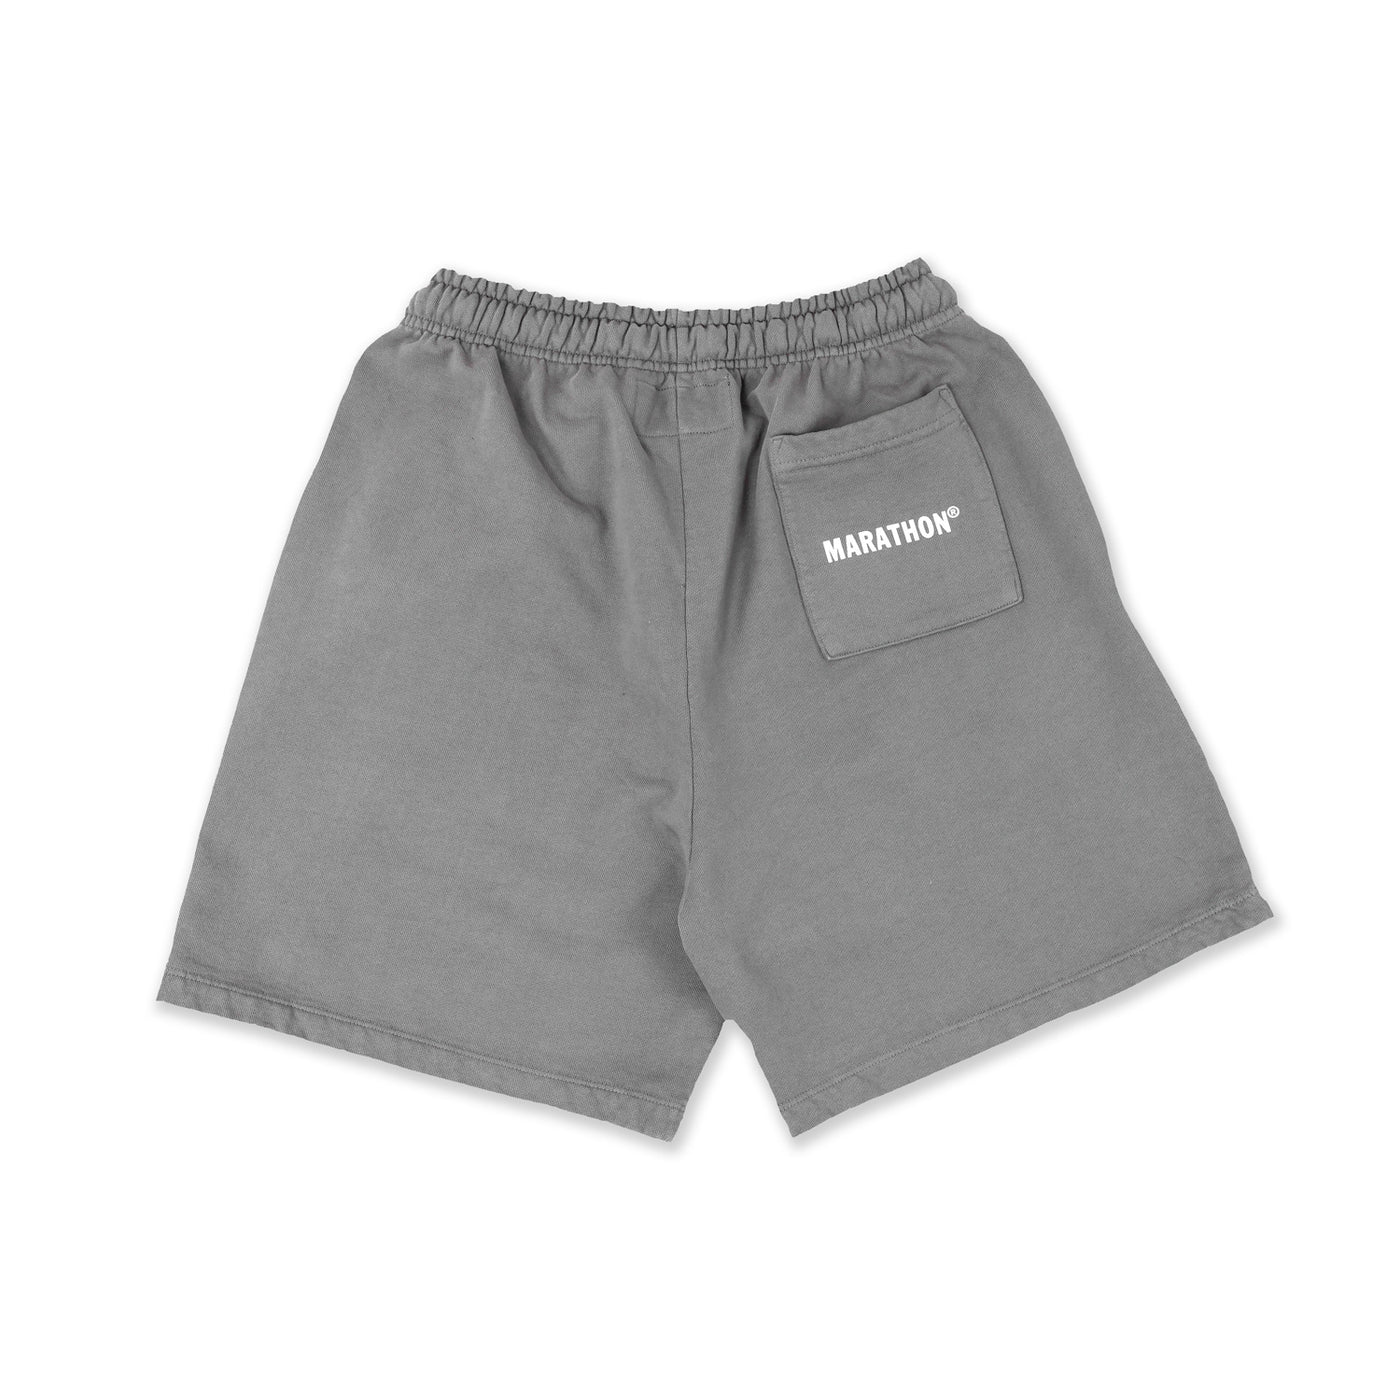 Marathon Trademark Sweat Shorts - Slate Grey - Back